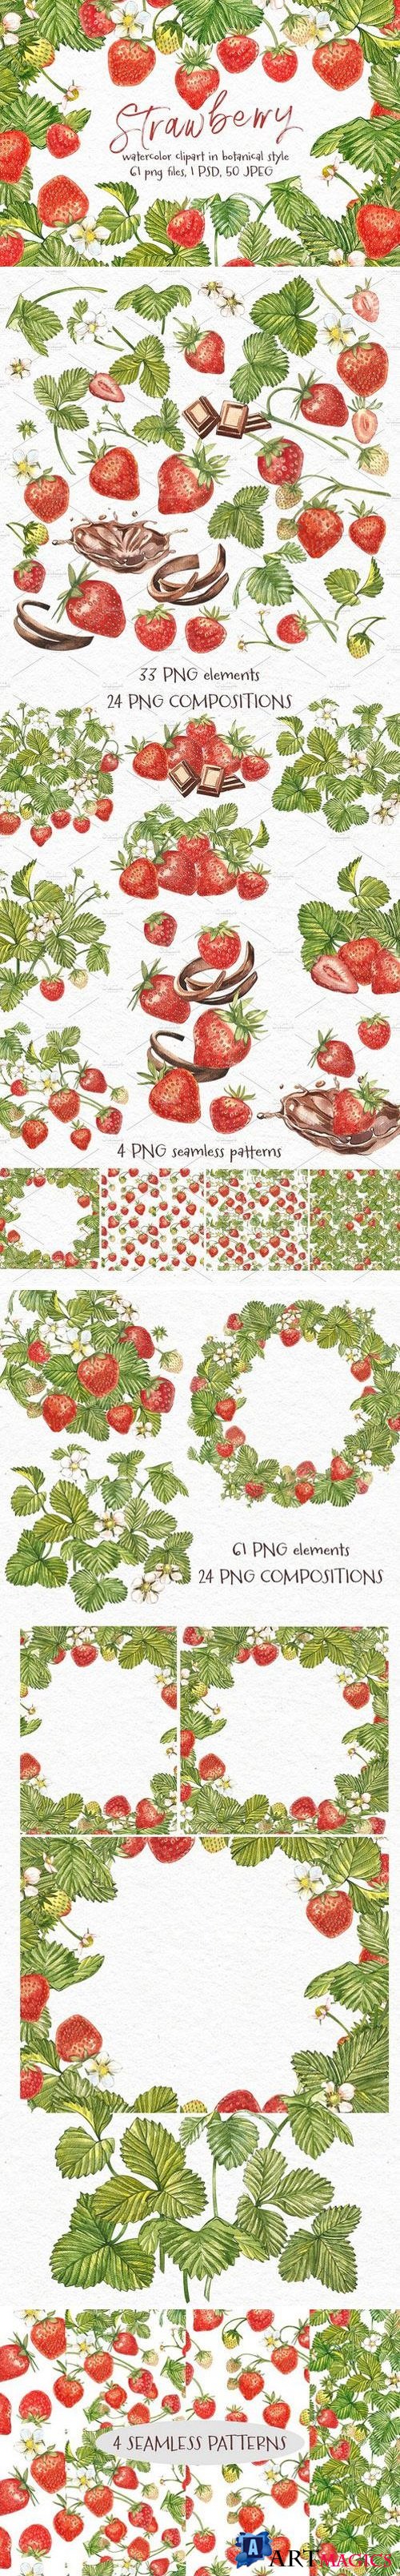 Strawberry illustrations 2078355